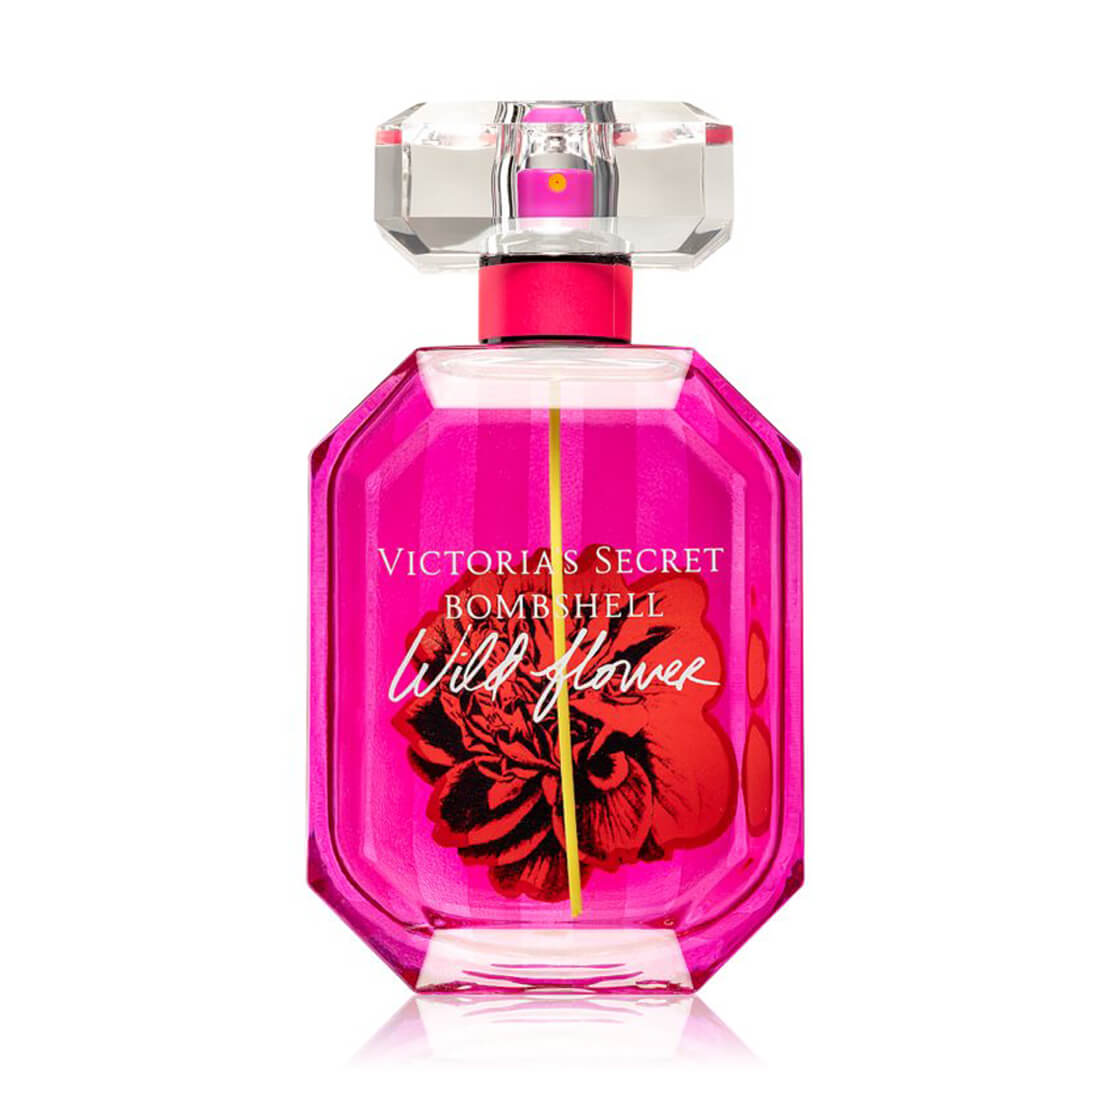 Victoria's Secret Bombshell Wild Flower Eau De Perfume - 100ml